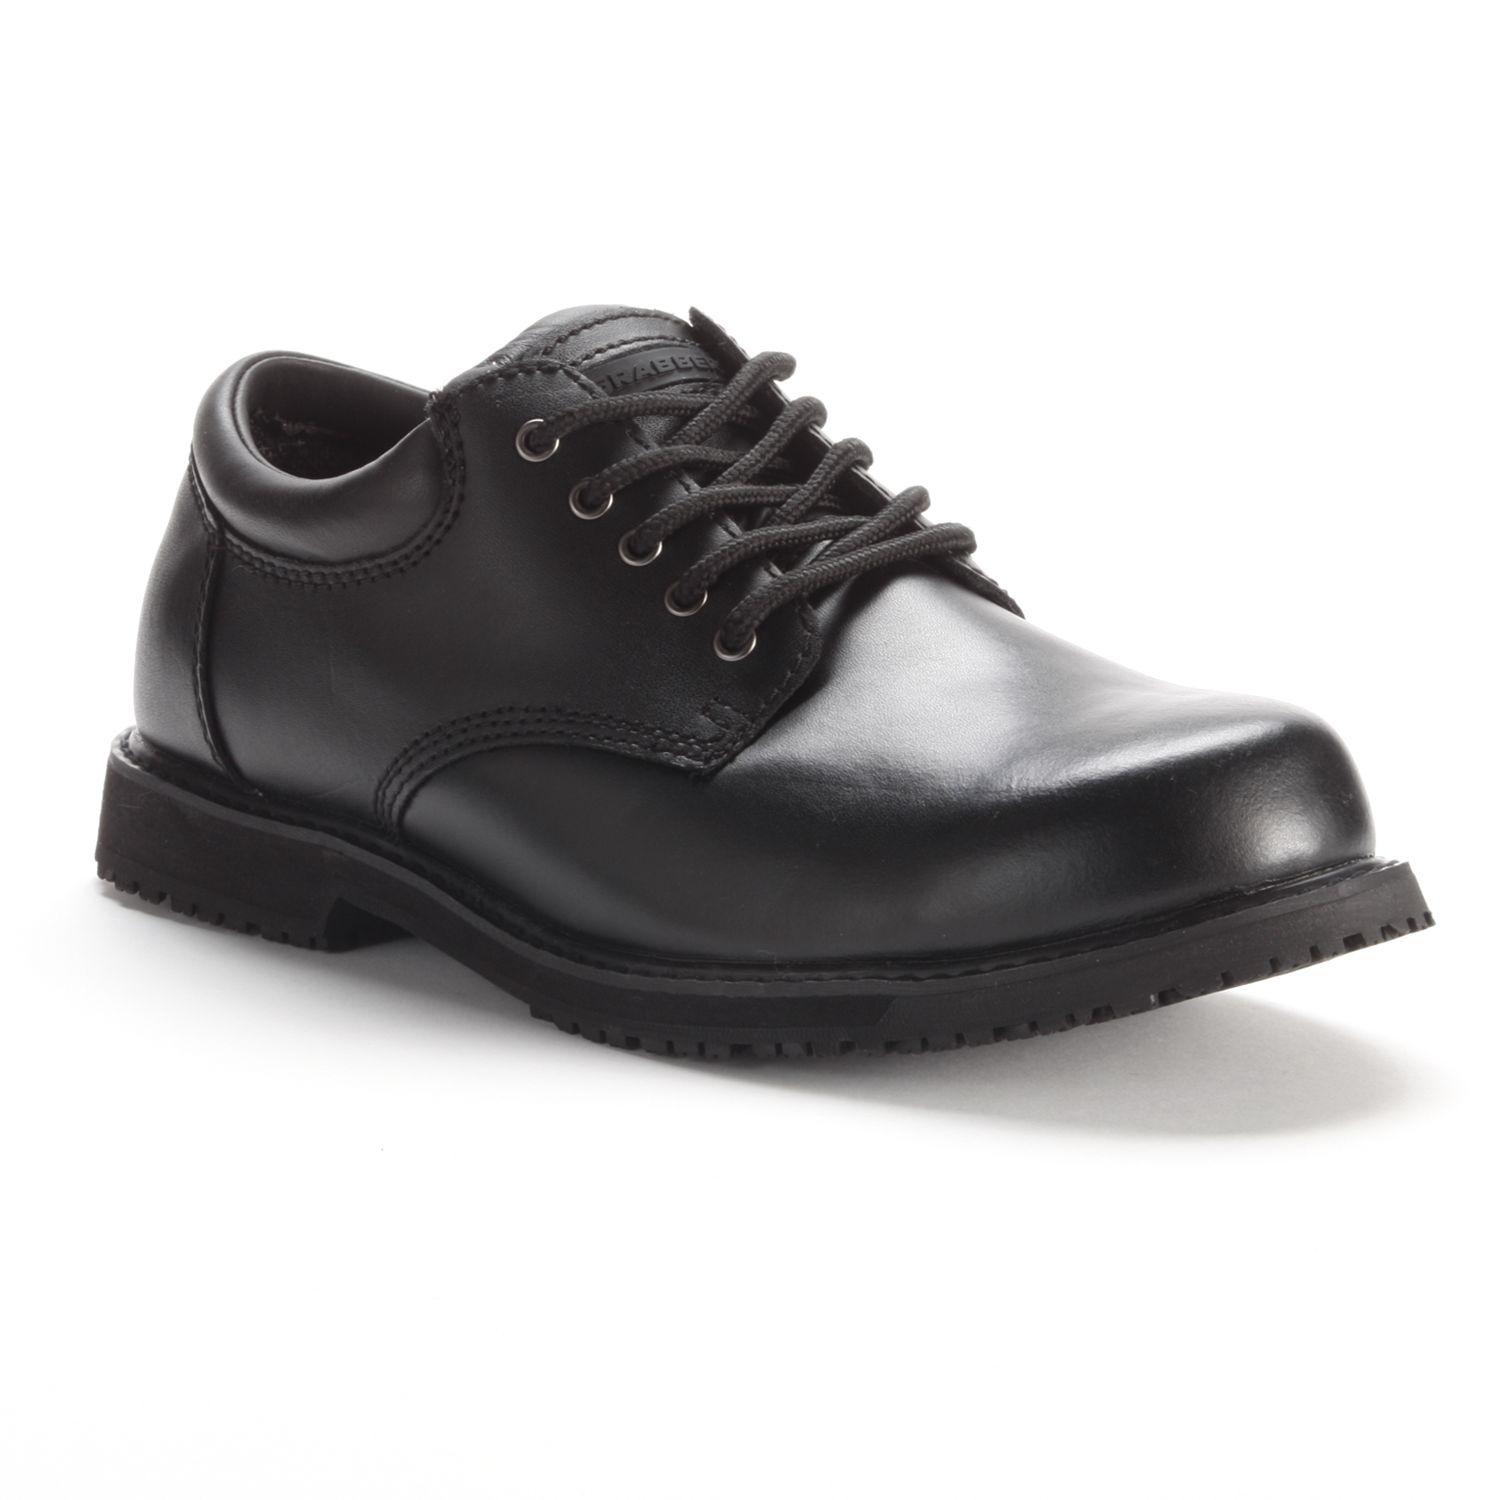 mens black slip on work shoes